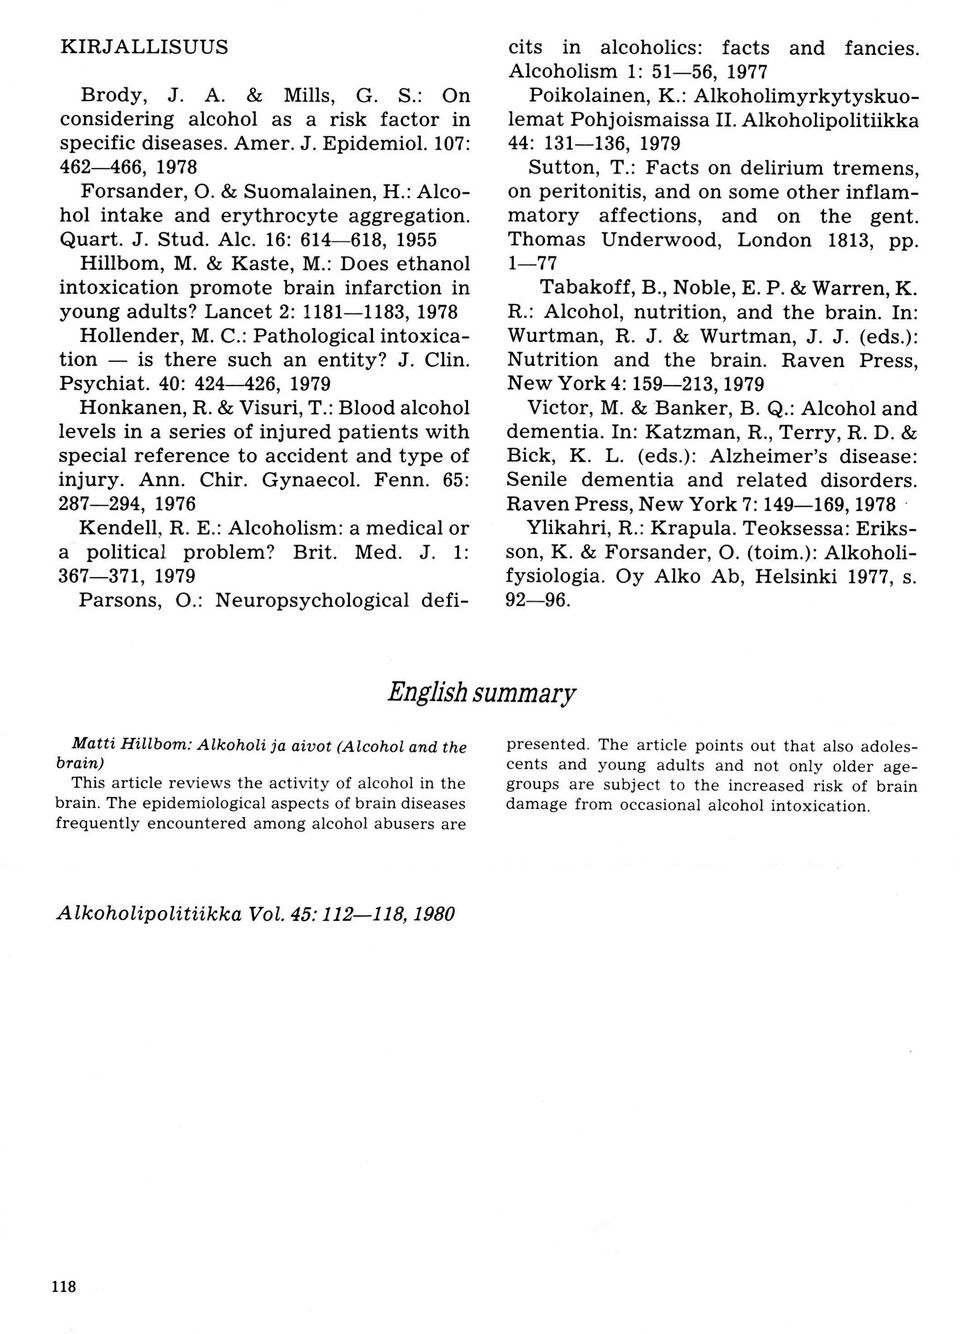 Lancet 2: 1181-1183, 1978 Hllender, M. C.: Pathlgical intxicatin is there such an - entity? J. Clin. Psychiat. 40: 424-426, 1979 Hnkanen, R.& Visuri, T.